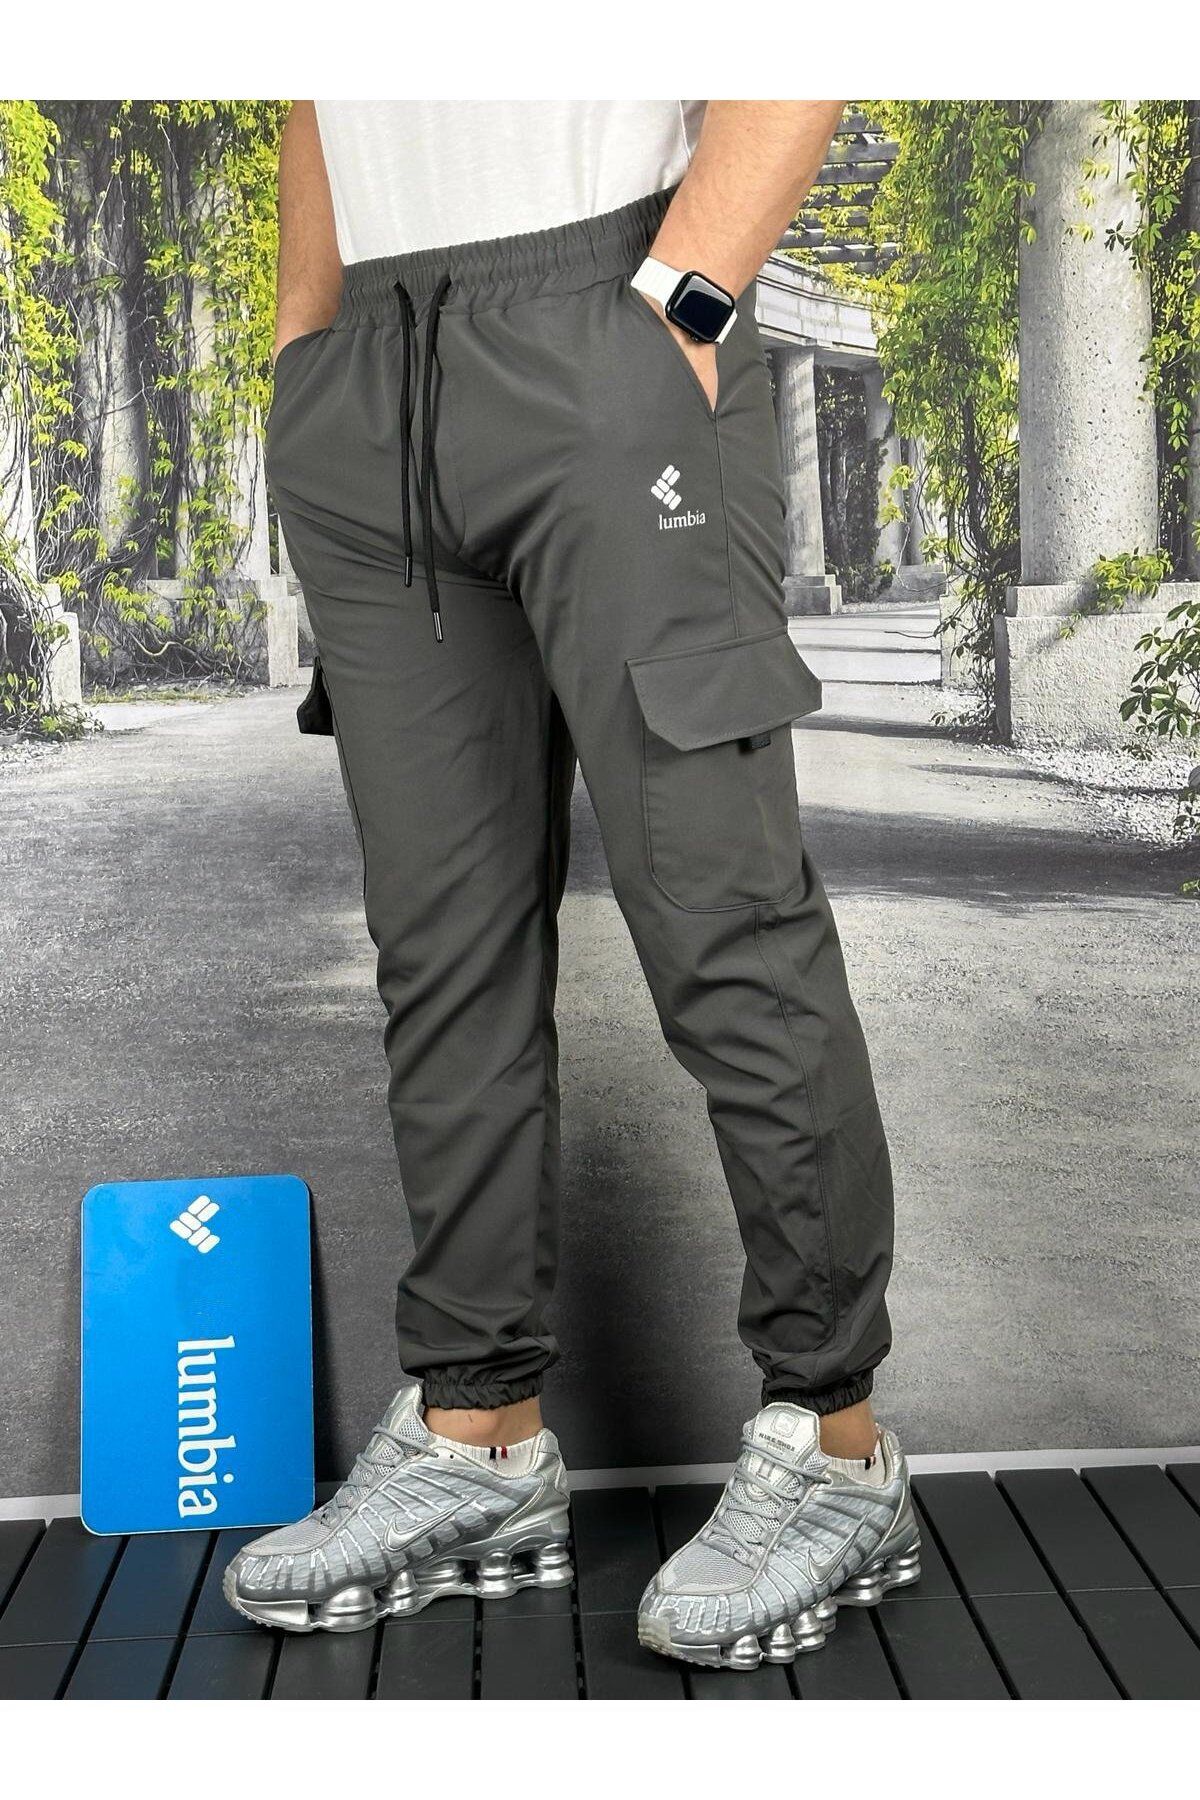 Mikro Tactical kargorcep cargocep outdoor 5 cepli jogger yazlık pantolon